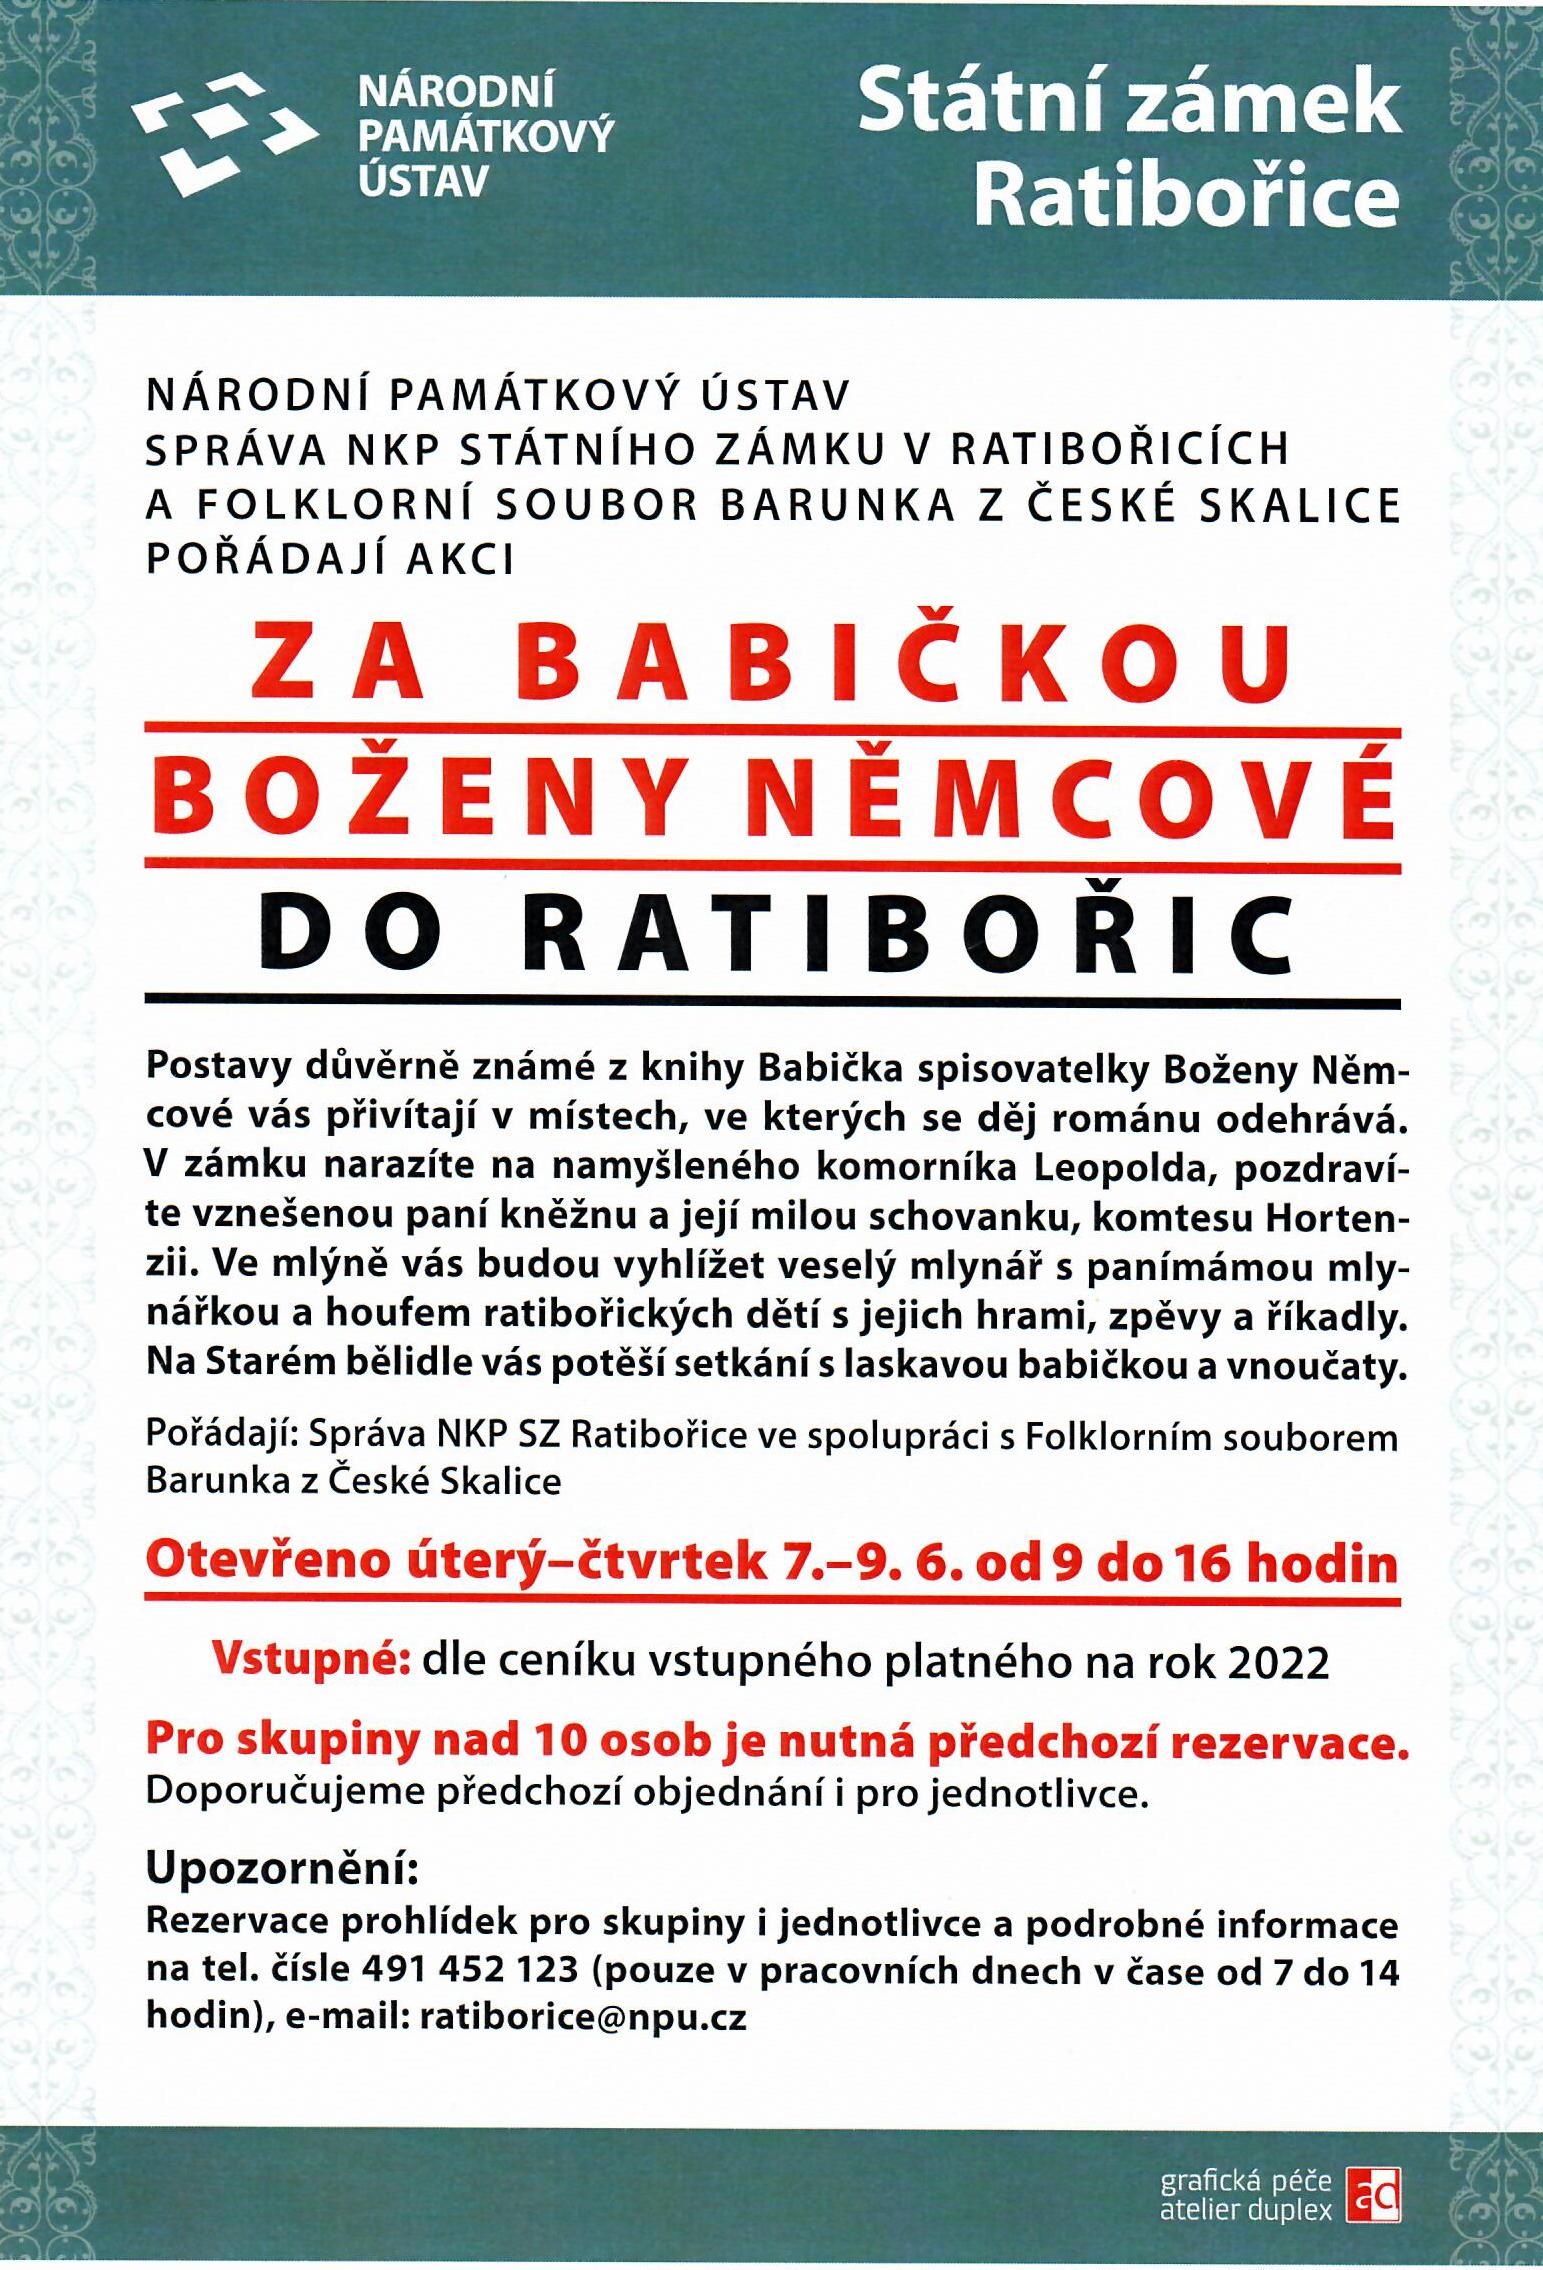 Za Babickou BN do Ratiboric 2022